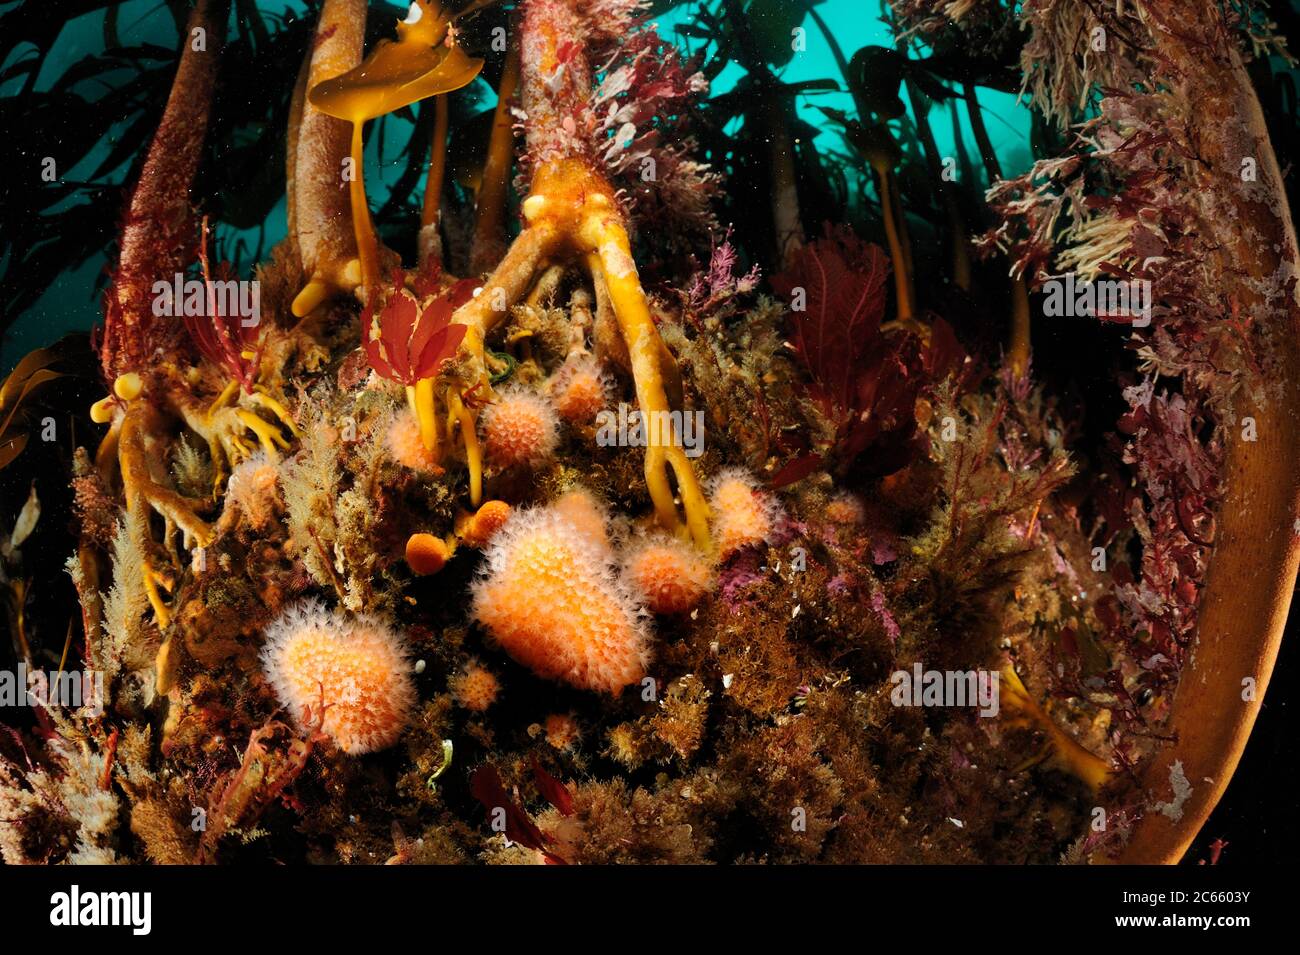 Foresta di kelp (Laminaria iperborea) con le dita dell'uomo morto (Alcyonium digitatum), Oceano Atlantico, Strømsholmen, Norvegia nordoccidentale Foto Stock